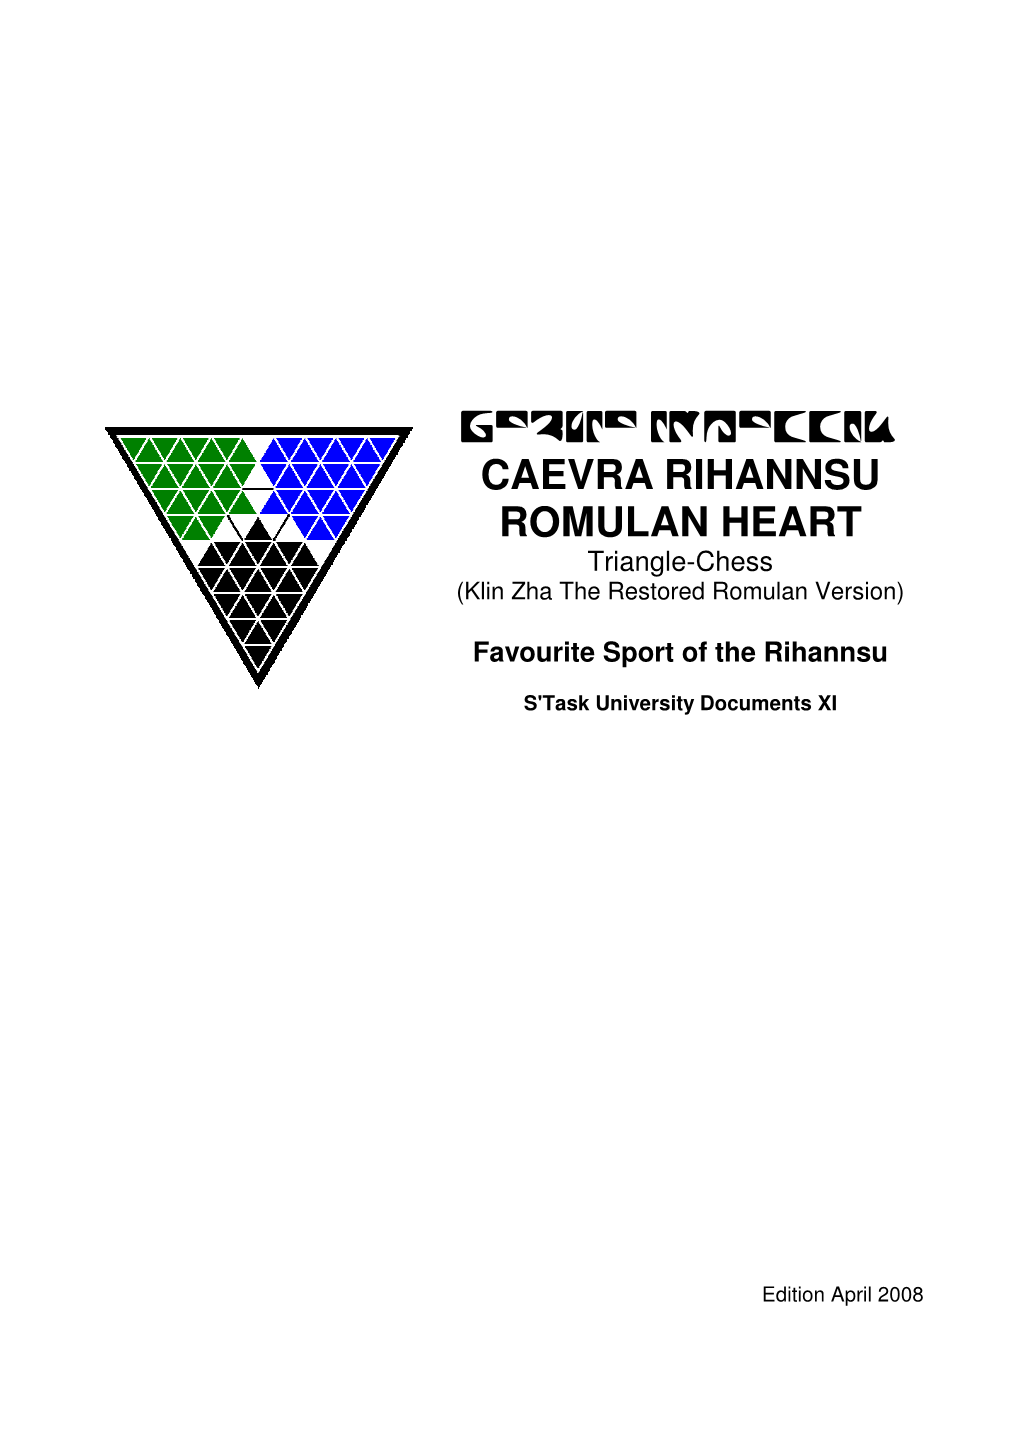 CAEVRA RIHANNSU ROMULAN HEART Triangle-Chess (Klin Zha the Restored Romulan Version)